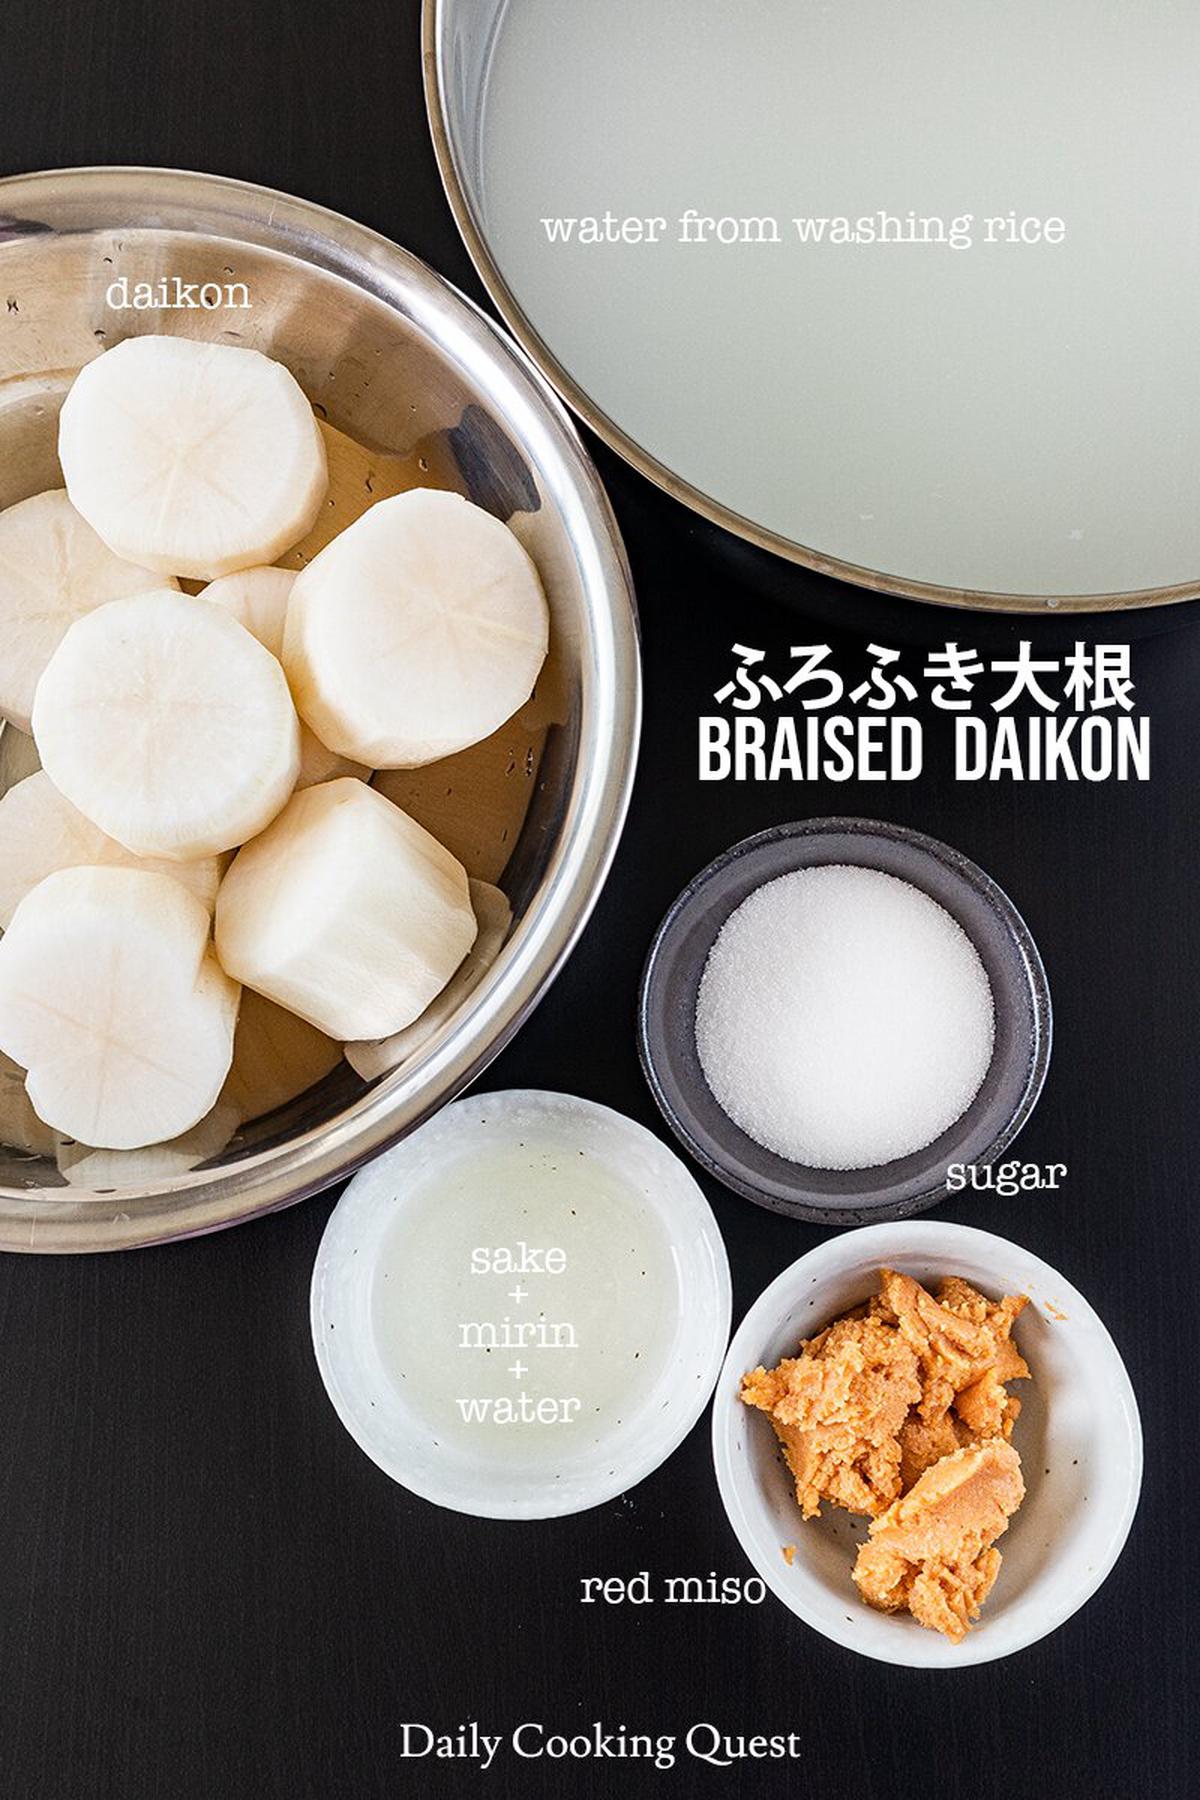 Ingredients to prepare Japanese braised daikon with miso sauce.